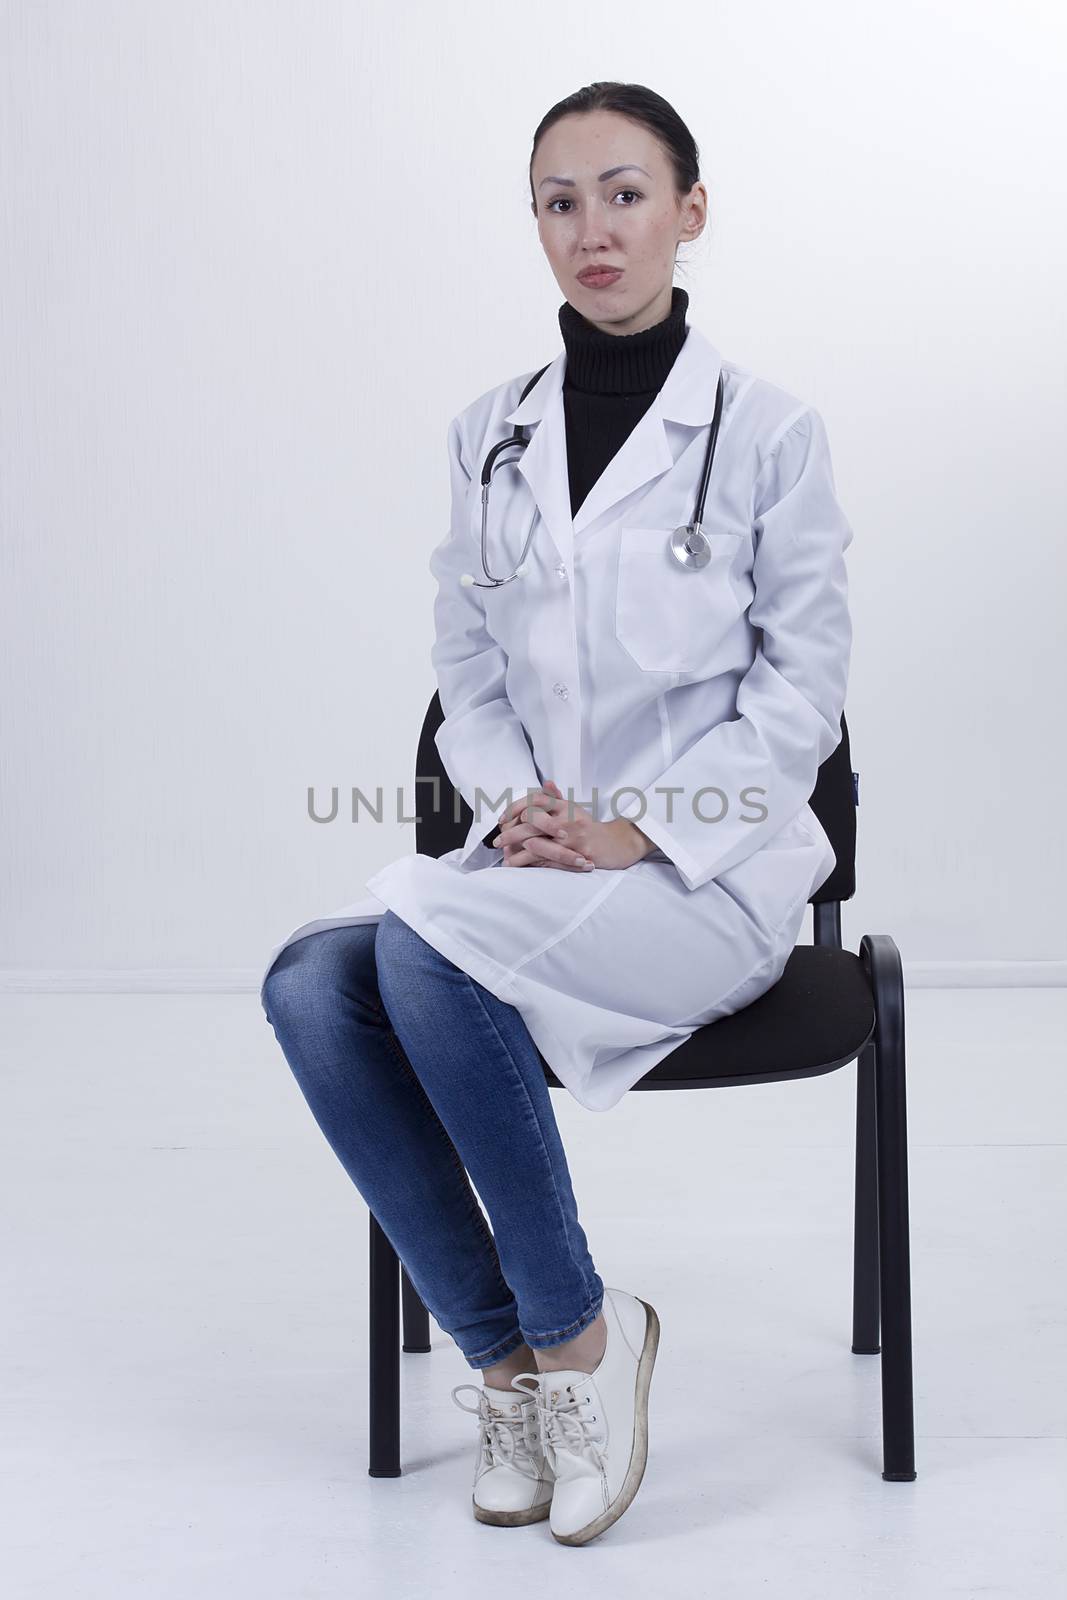 Female medical student by VIPDesignUSA